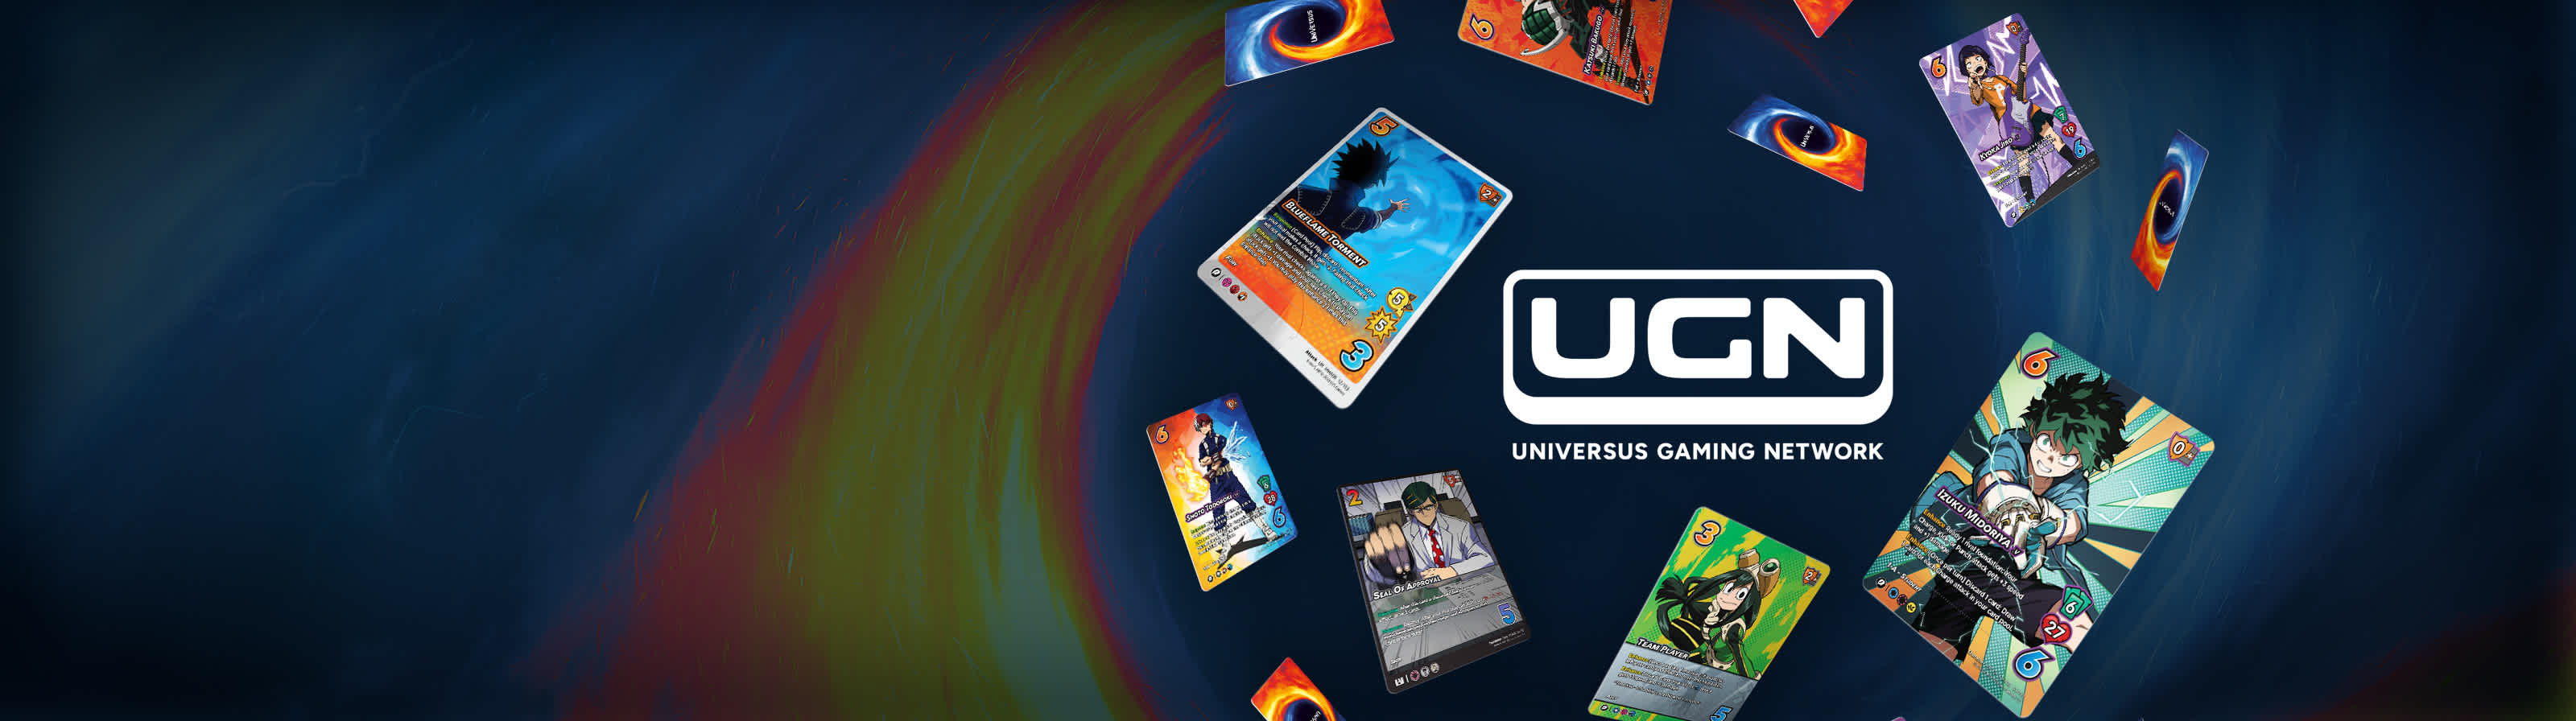 UGN-Announce-Article-Featured-Desktop@2x